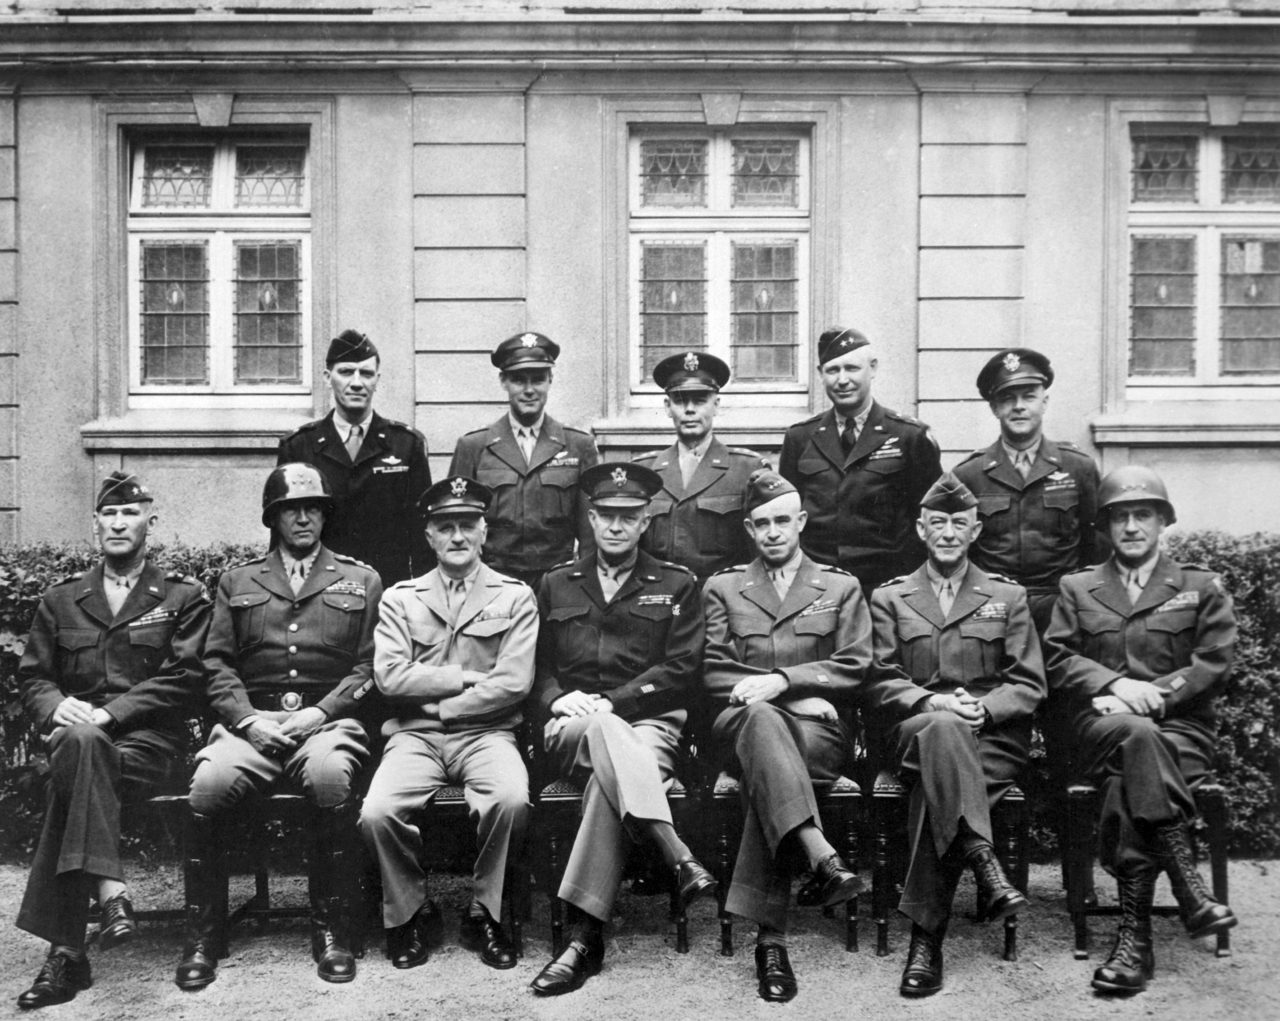 Senior American commanders of the European theater of World War II